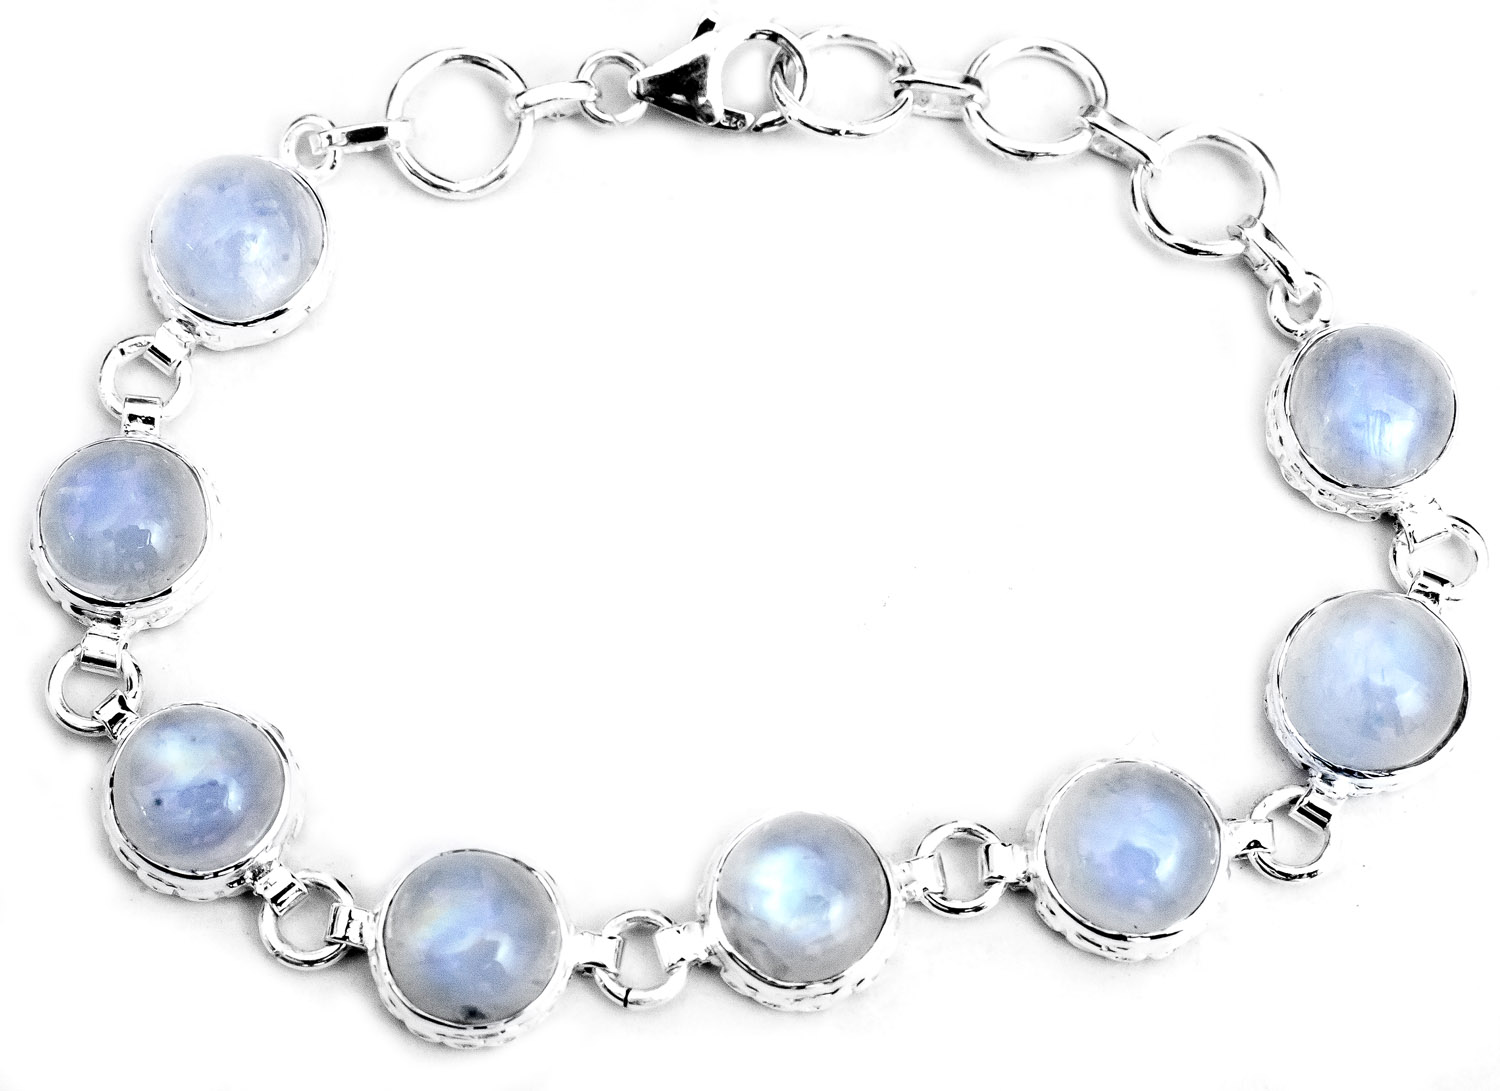 Buy Sterling Silver Bracelet With Rainbow Moonstone Online at Jayporecom